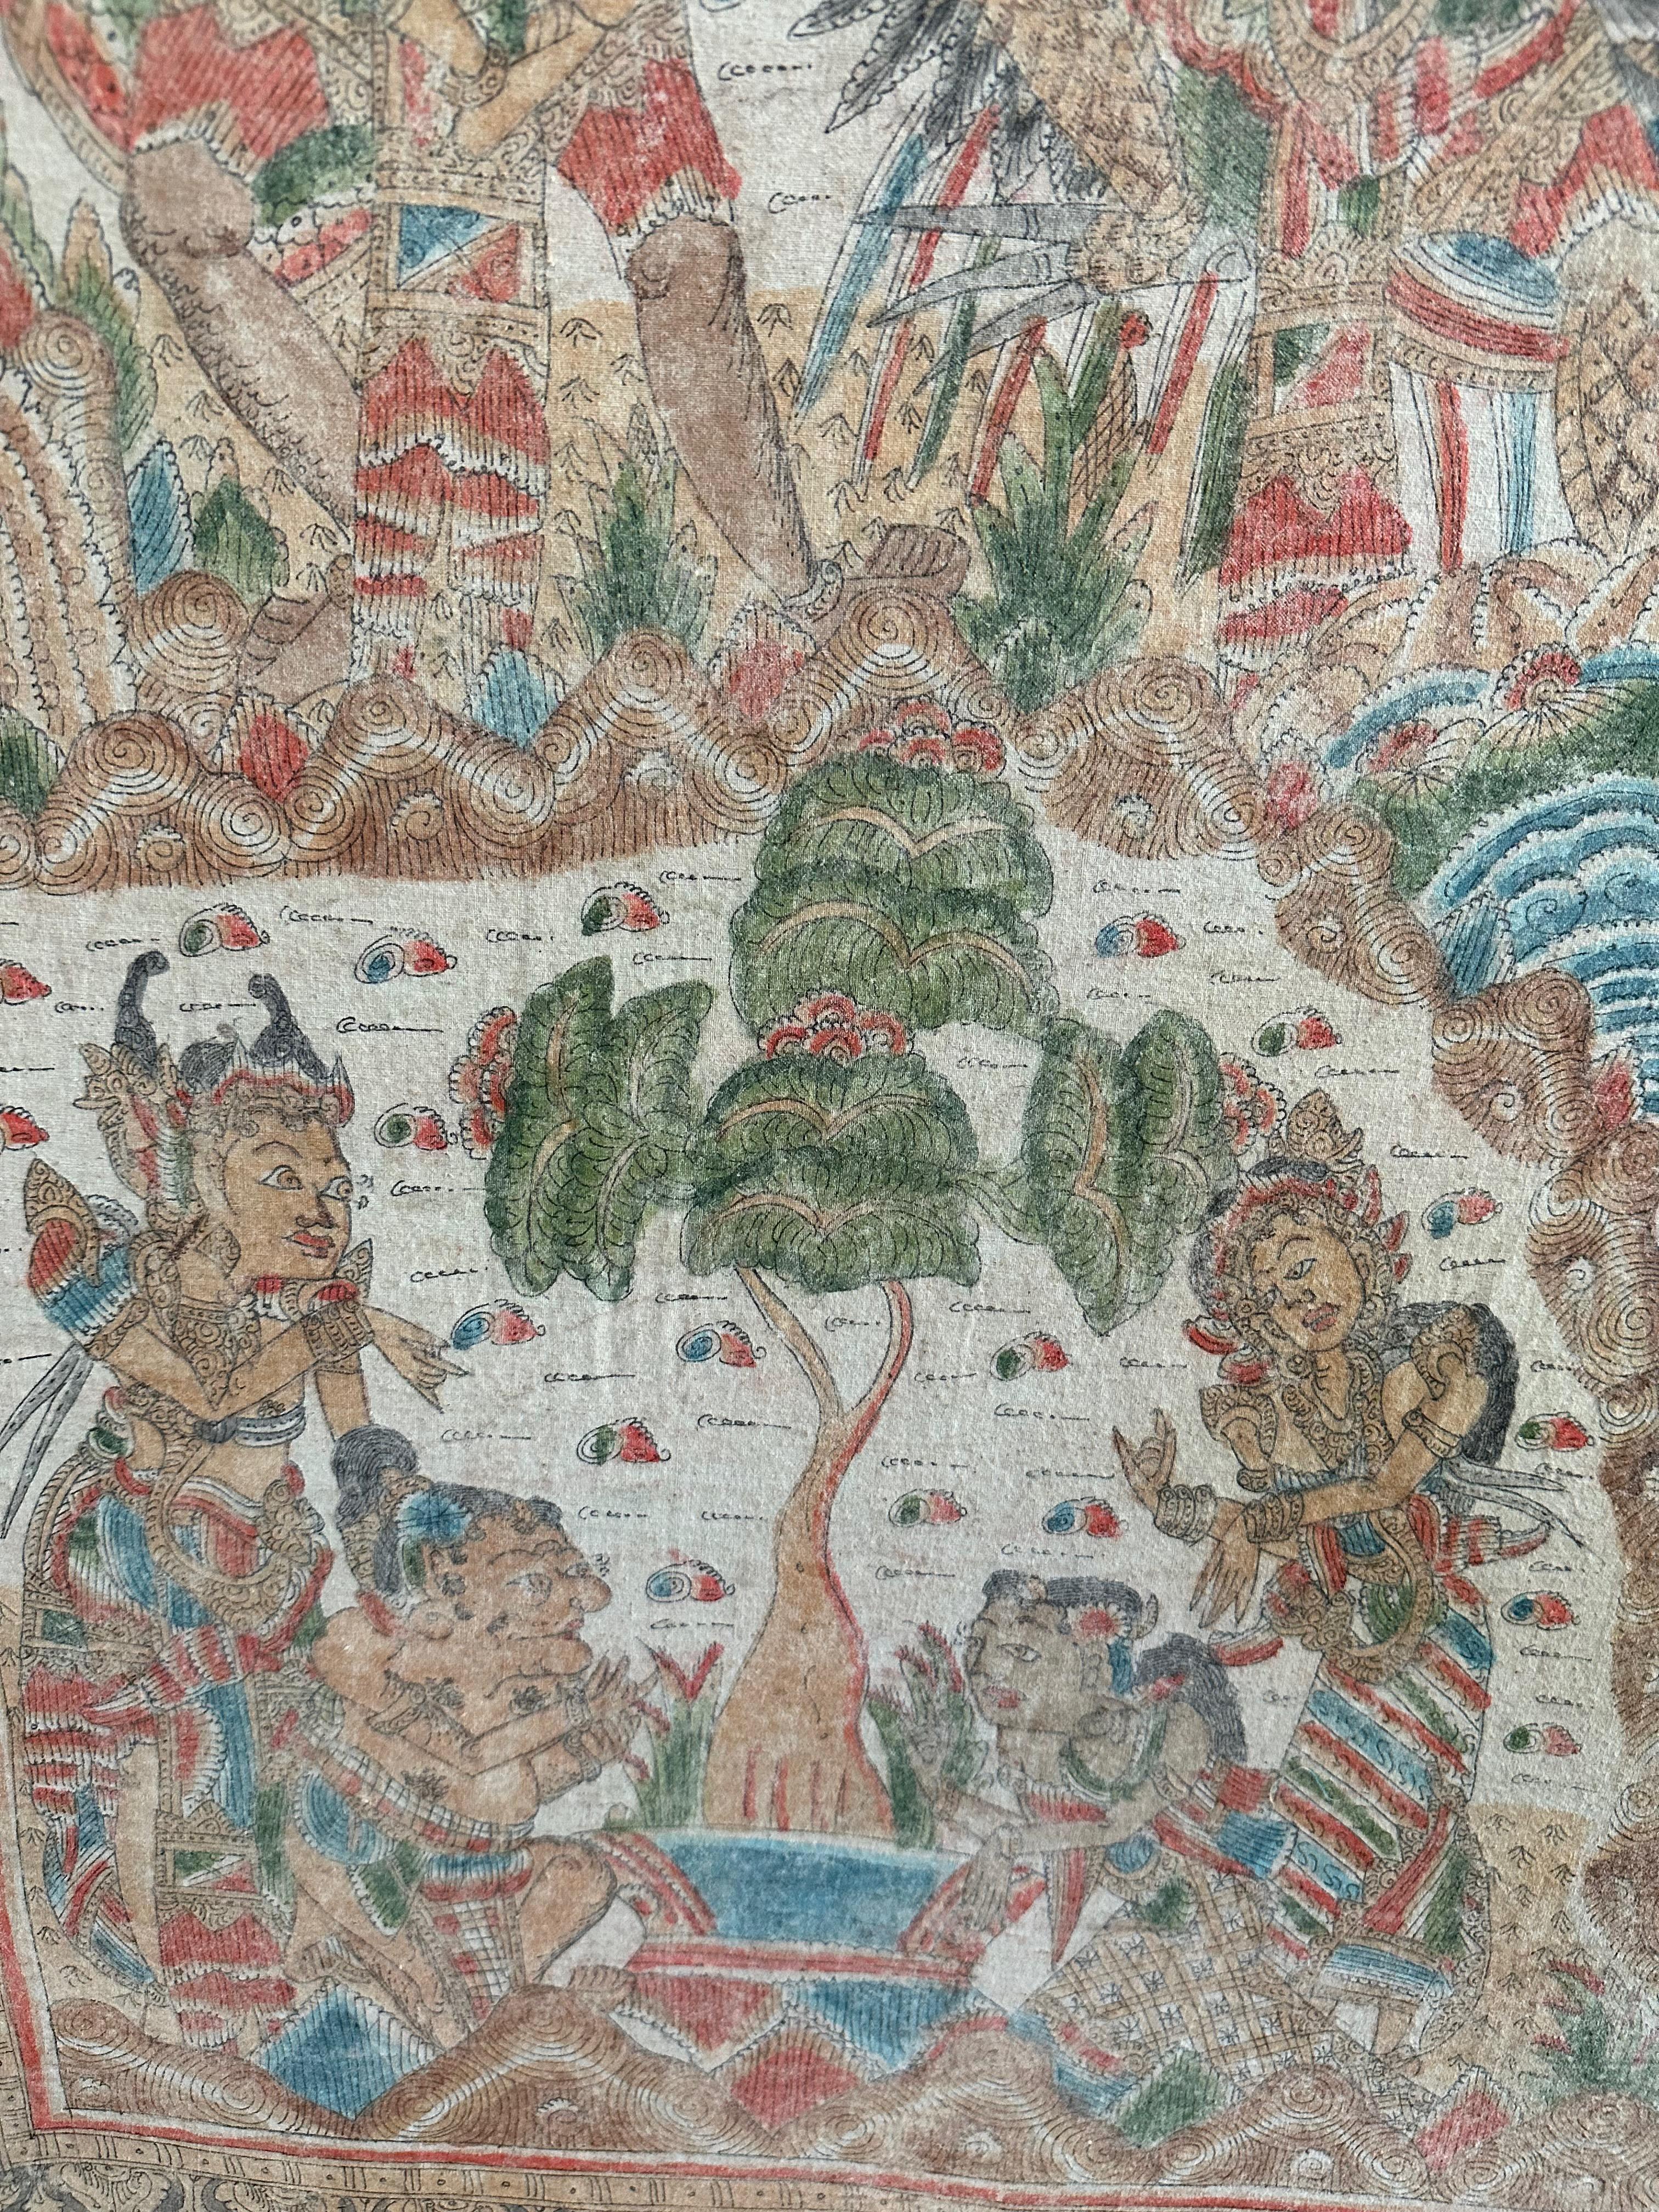 Bali Hindu Textile Framed 'Kamasan' Painting, Indonesia, circa 1900 For Sale 2